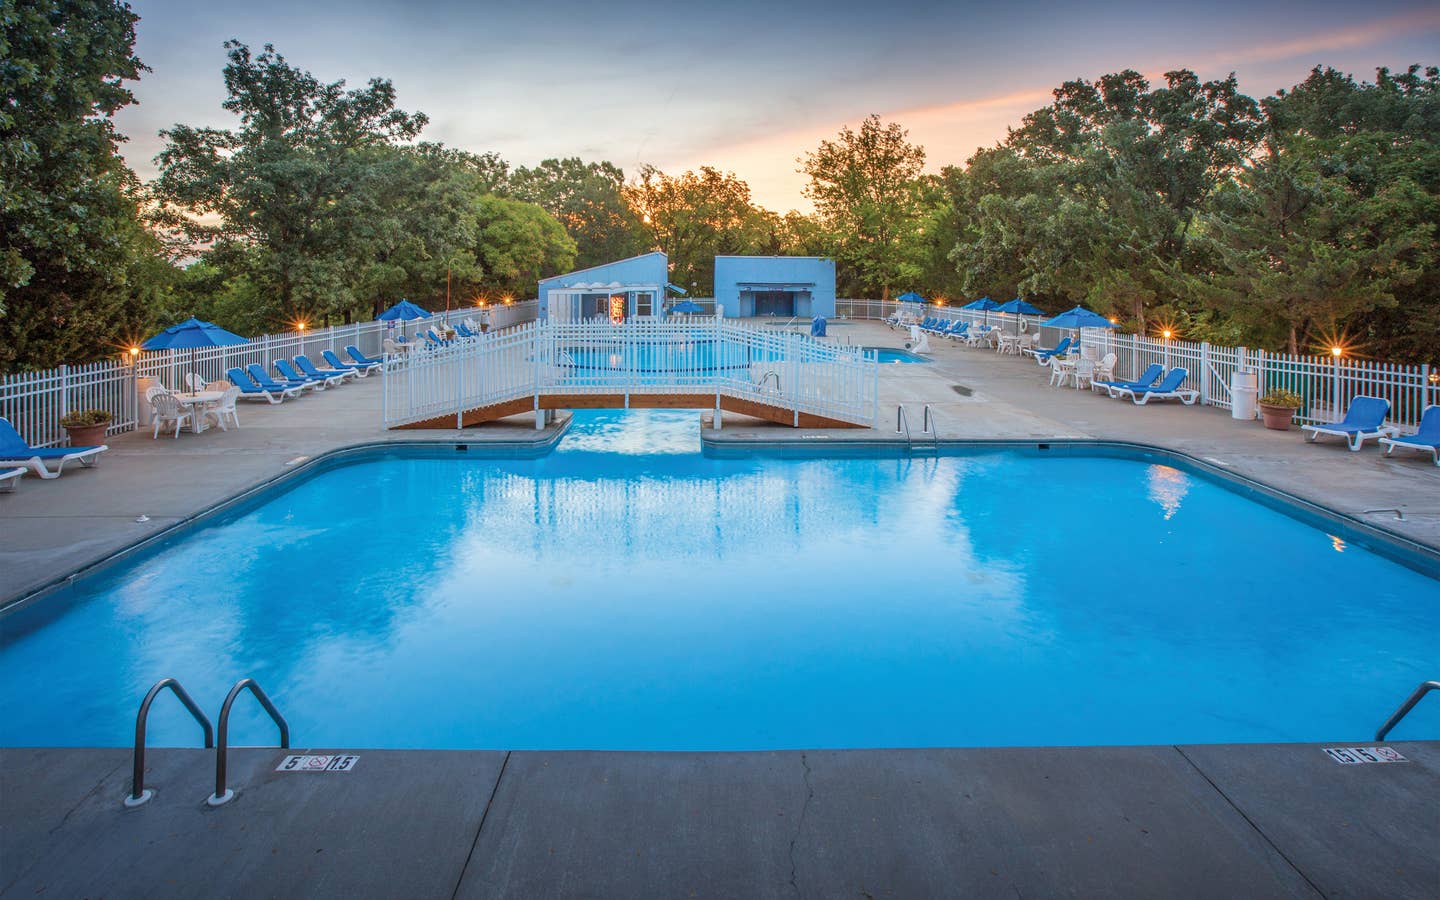 Outdoor pool at Ozark Mountain Resort in Kimberling City, Missouri.